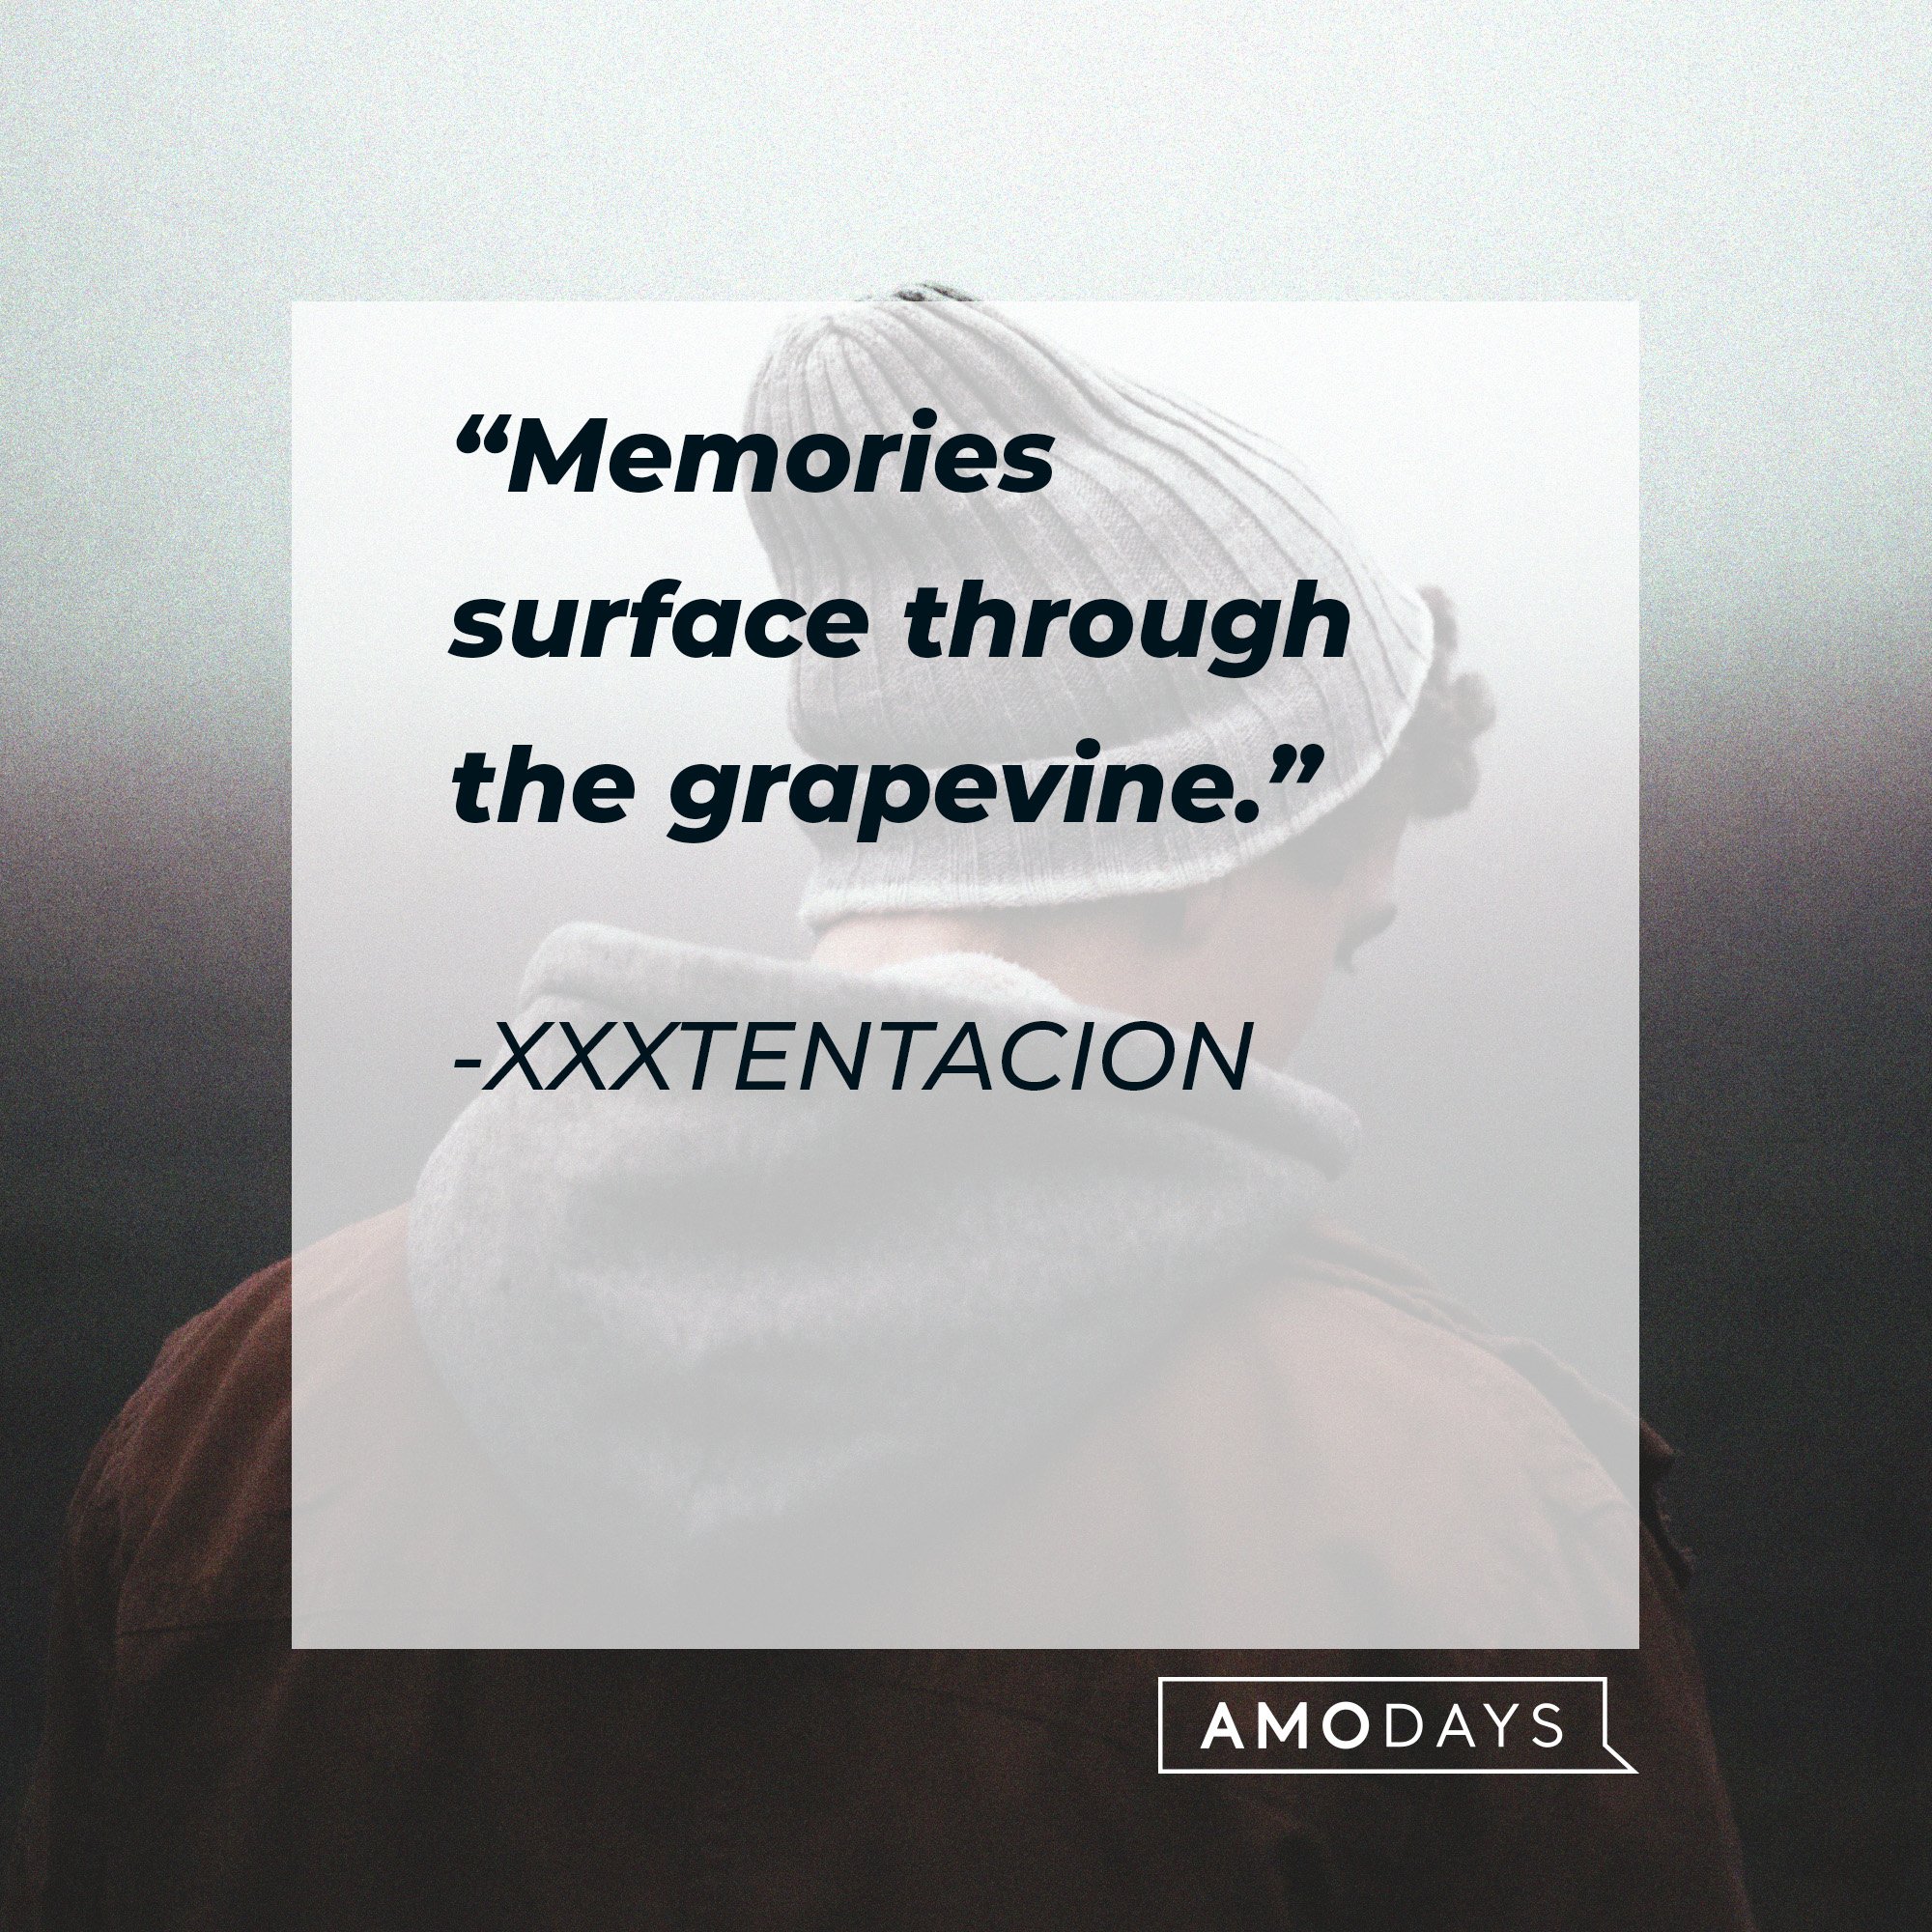 Xxxtentacion’s quote: “Memories surface through the grapevine.” | Image: AmoDays